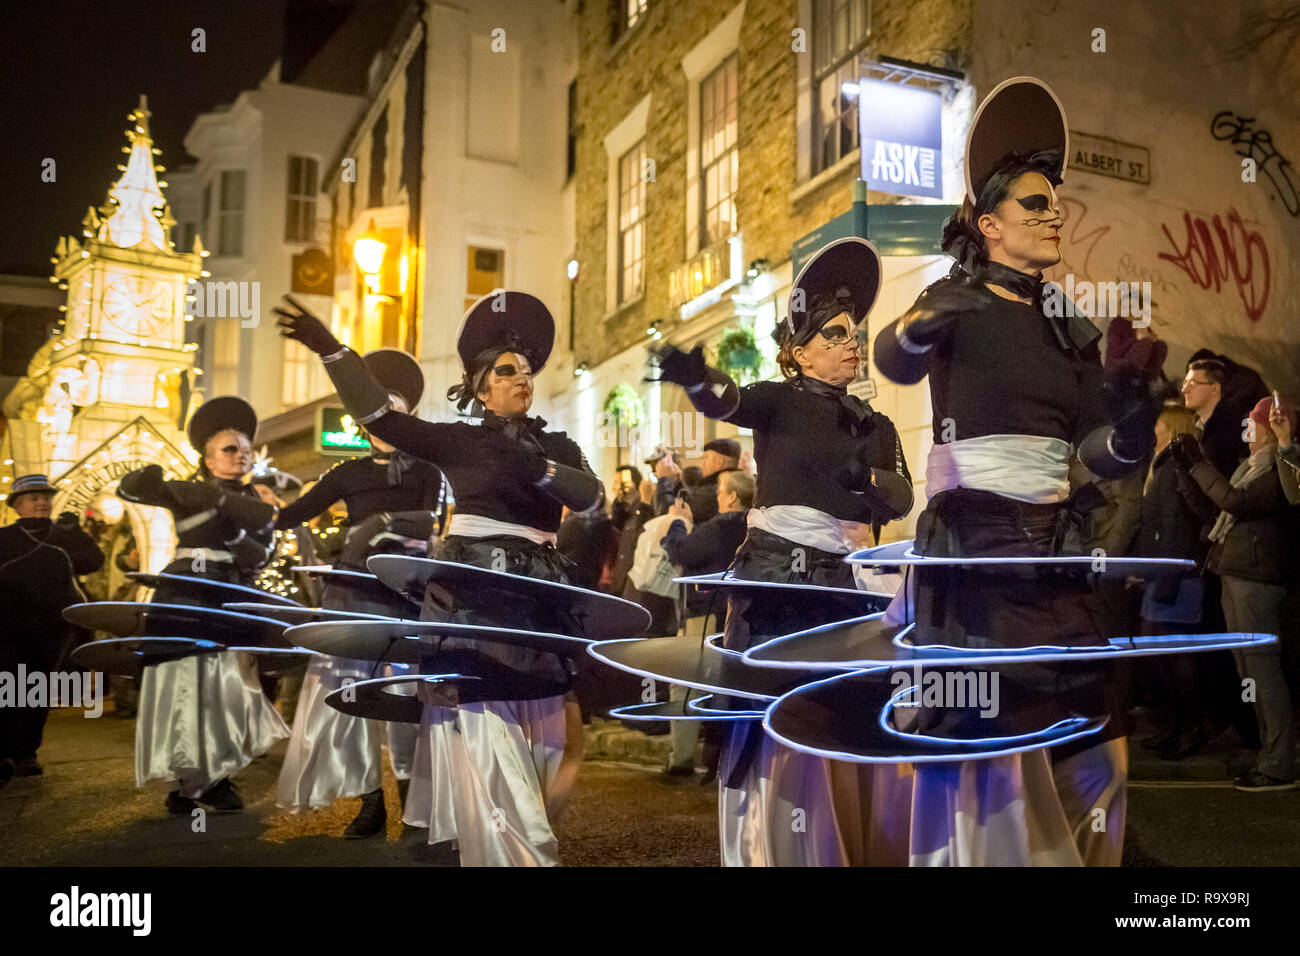 Brighton, East Sussex, UK. 21st Dec 2018. Burning of the Clocks lantern parade marking the shortest day of the year. © Guy Corbishley/Alamy Live News Stock Photo